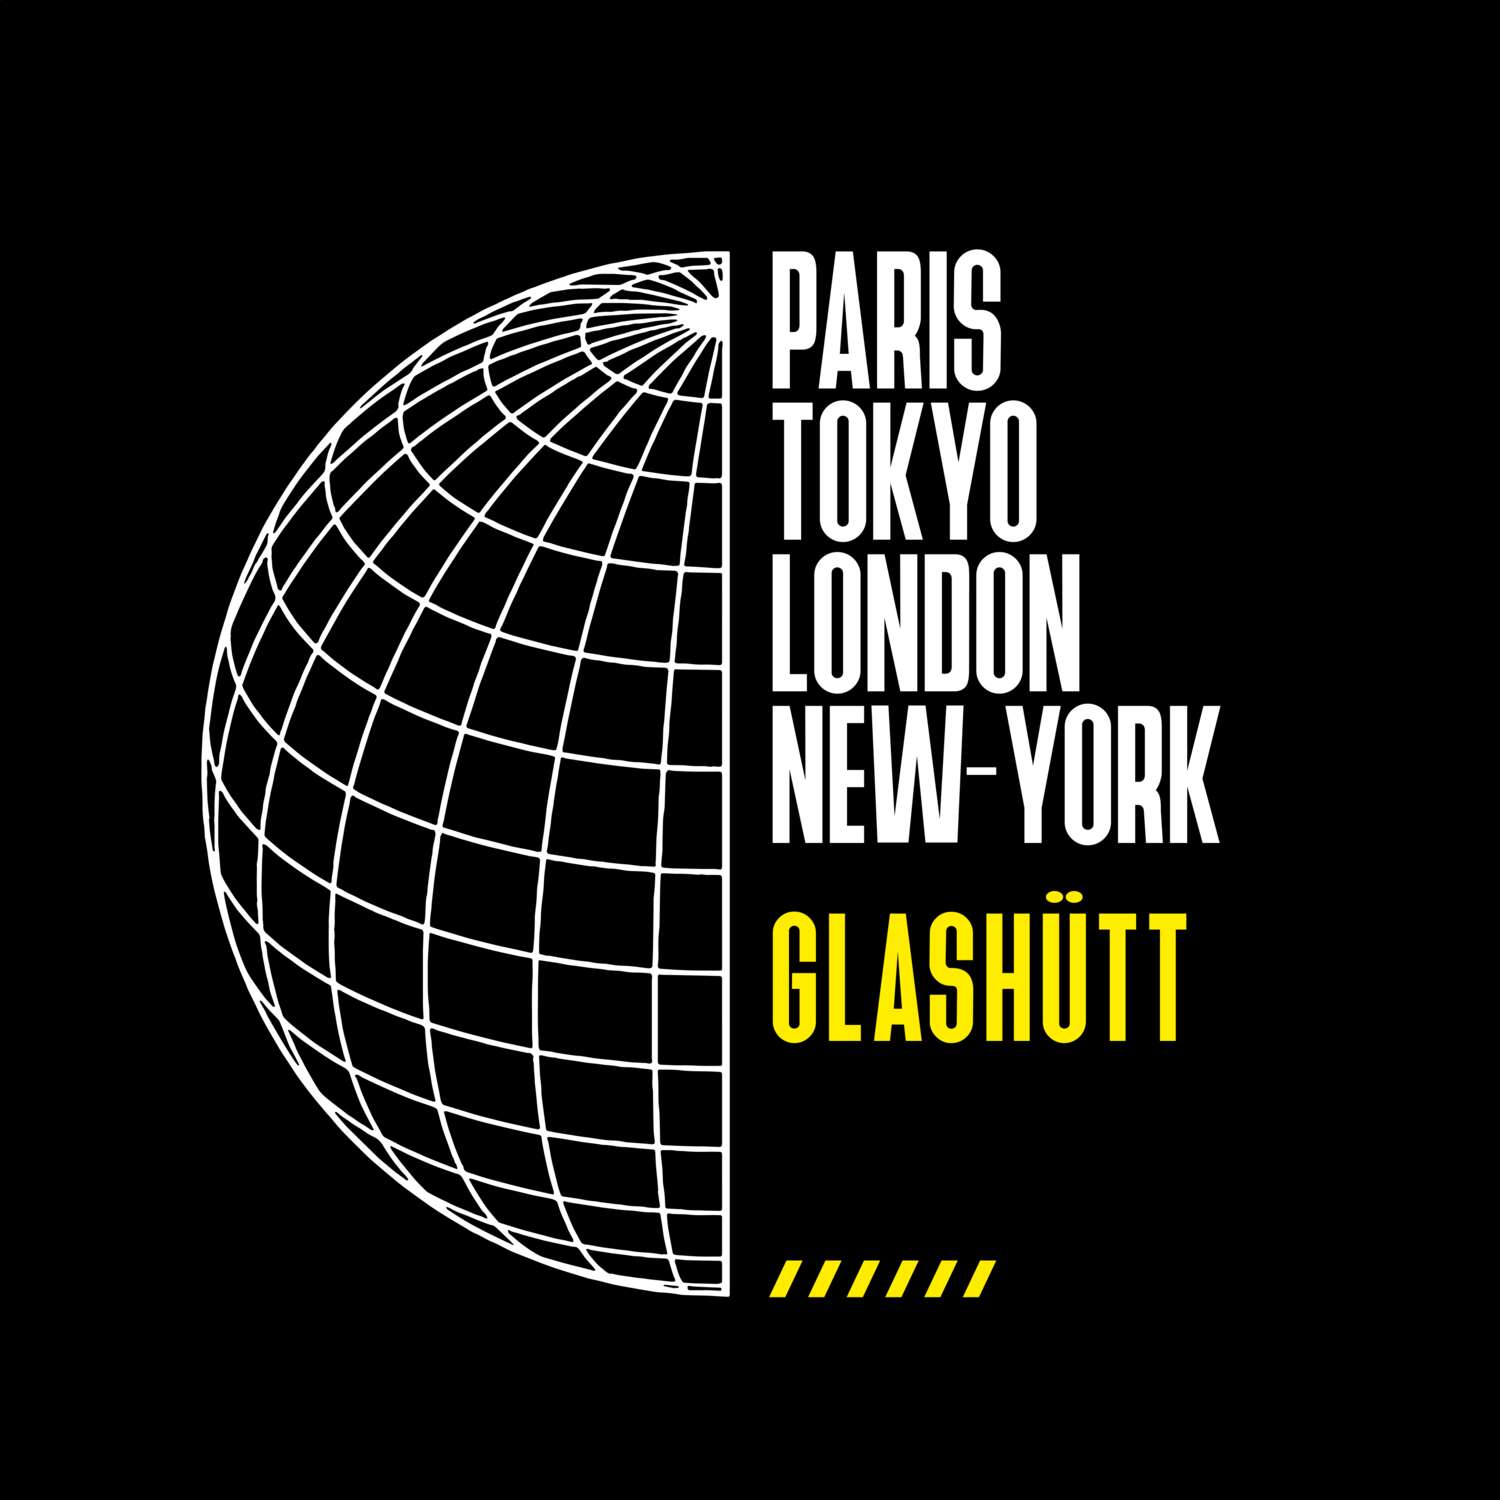 Glashütt T-Shirt »Paris Tokyo London«